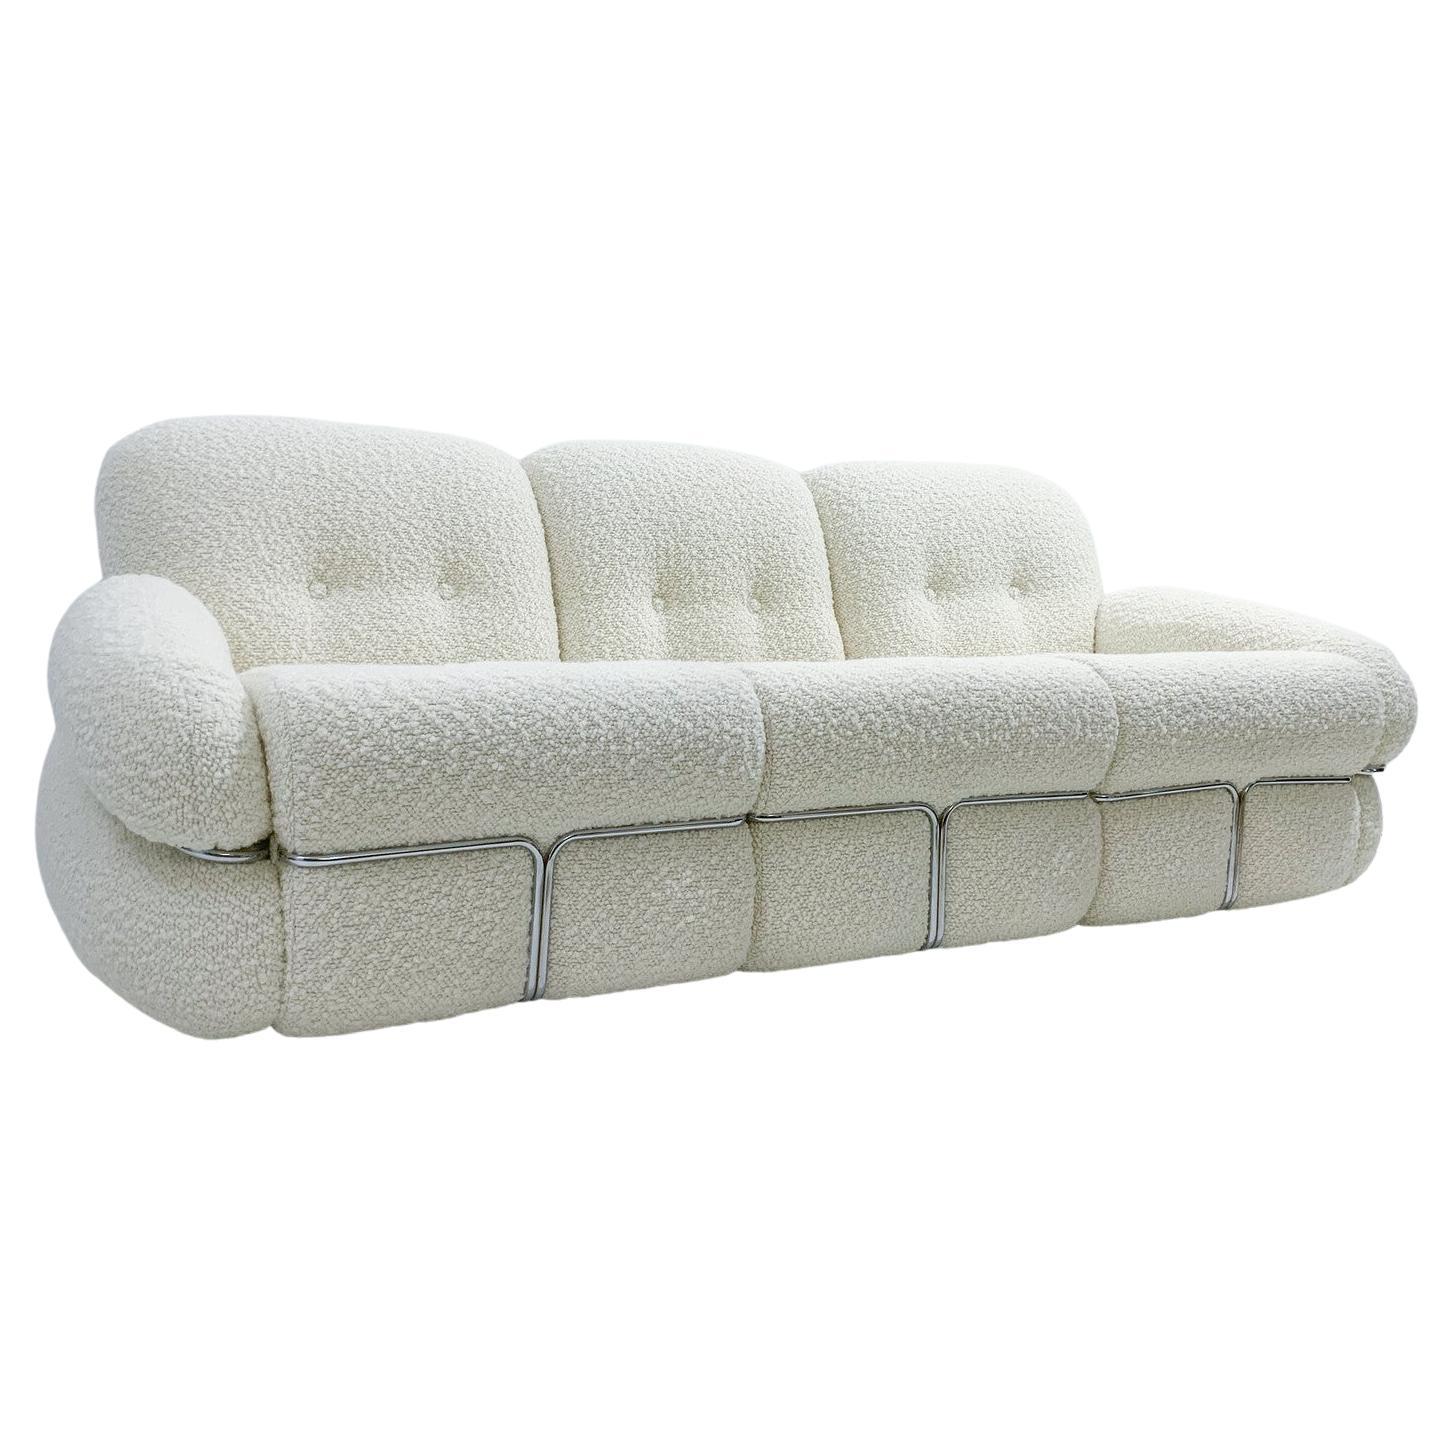 Mid-Century Modern Italian Three-Seater Sofa, White Bouclette Fabric, 1970s For Sale